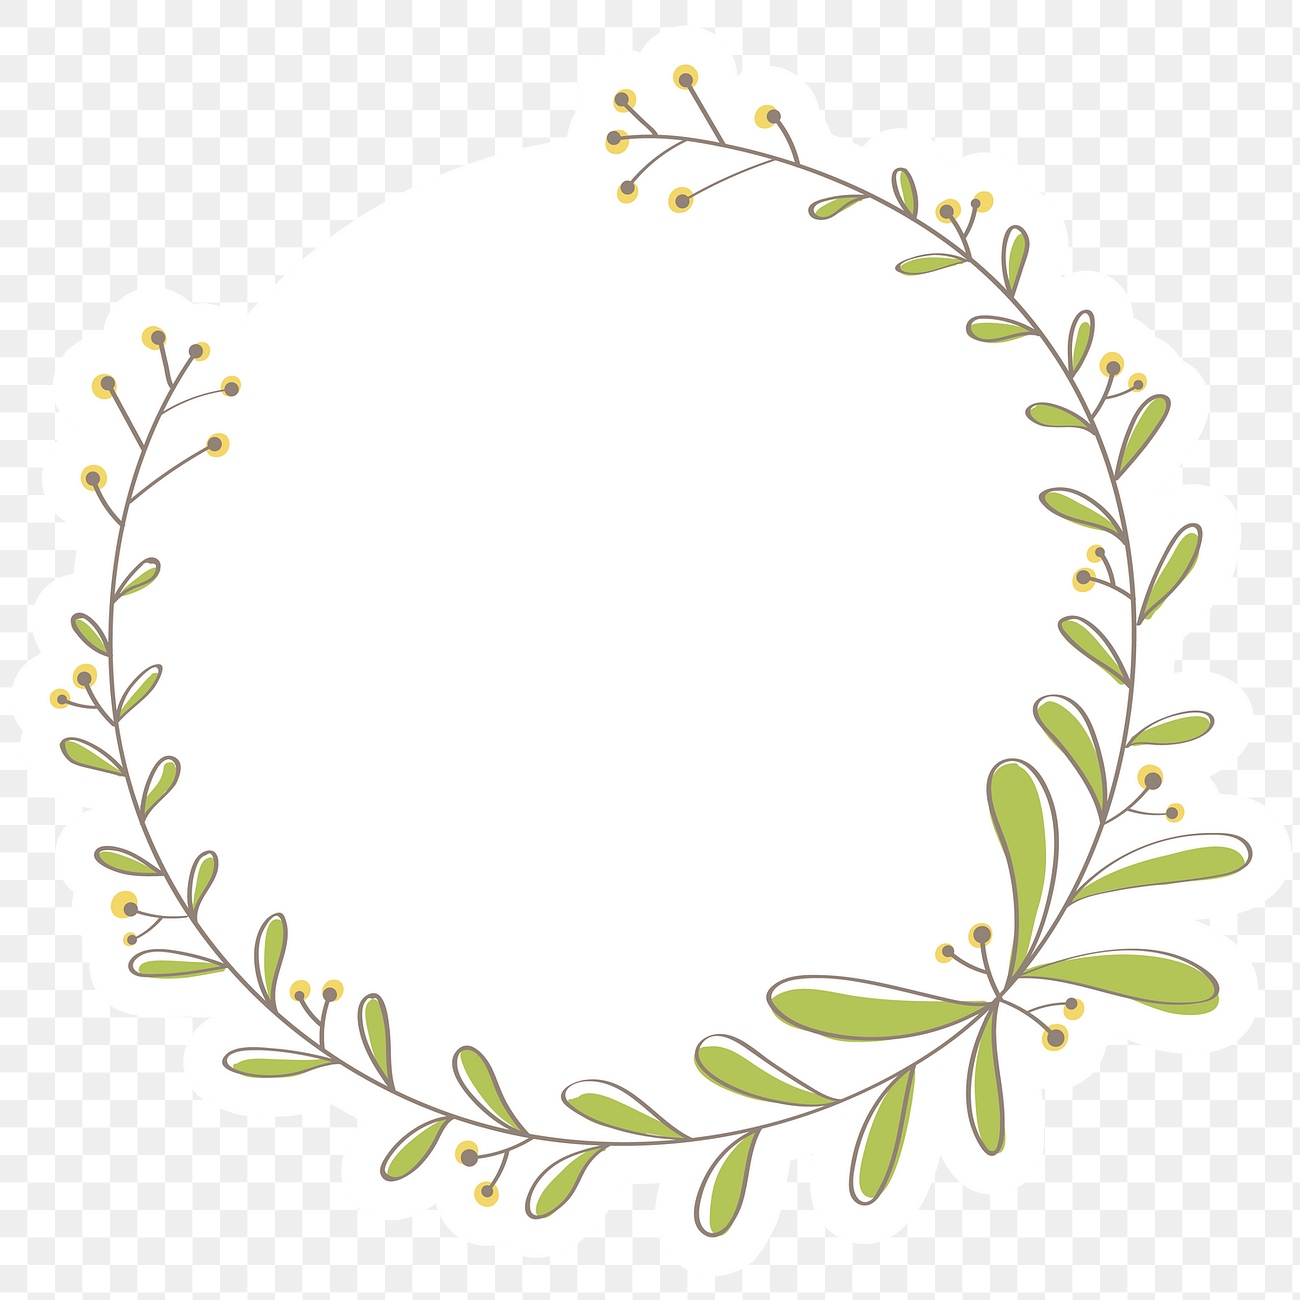 Leafy doodle frame design element | Premium PNG Sticker - rawpixel